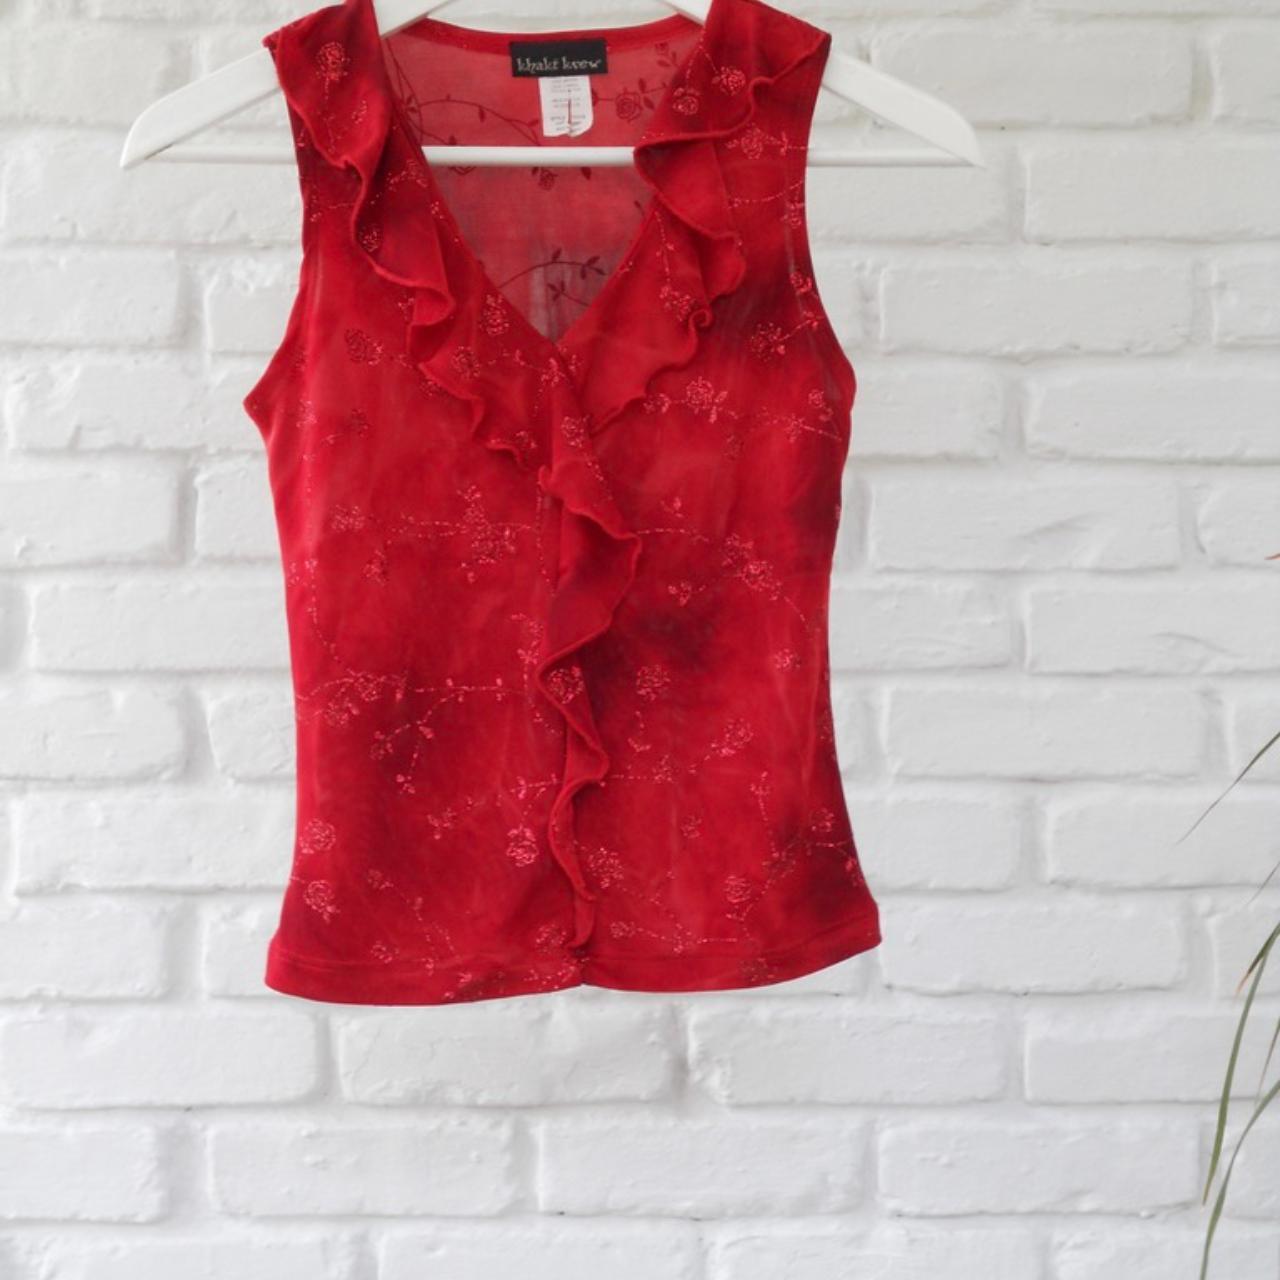 Khaki Krew Women's Red Vest (4)